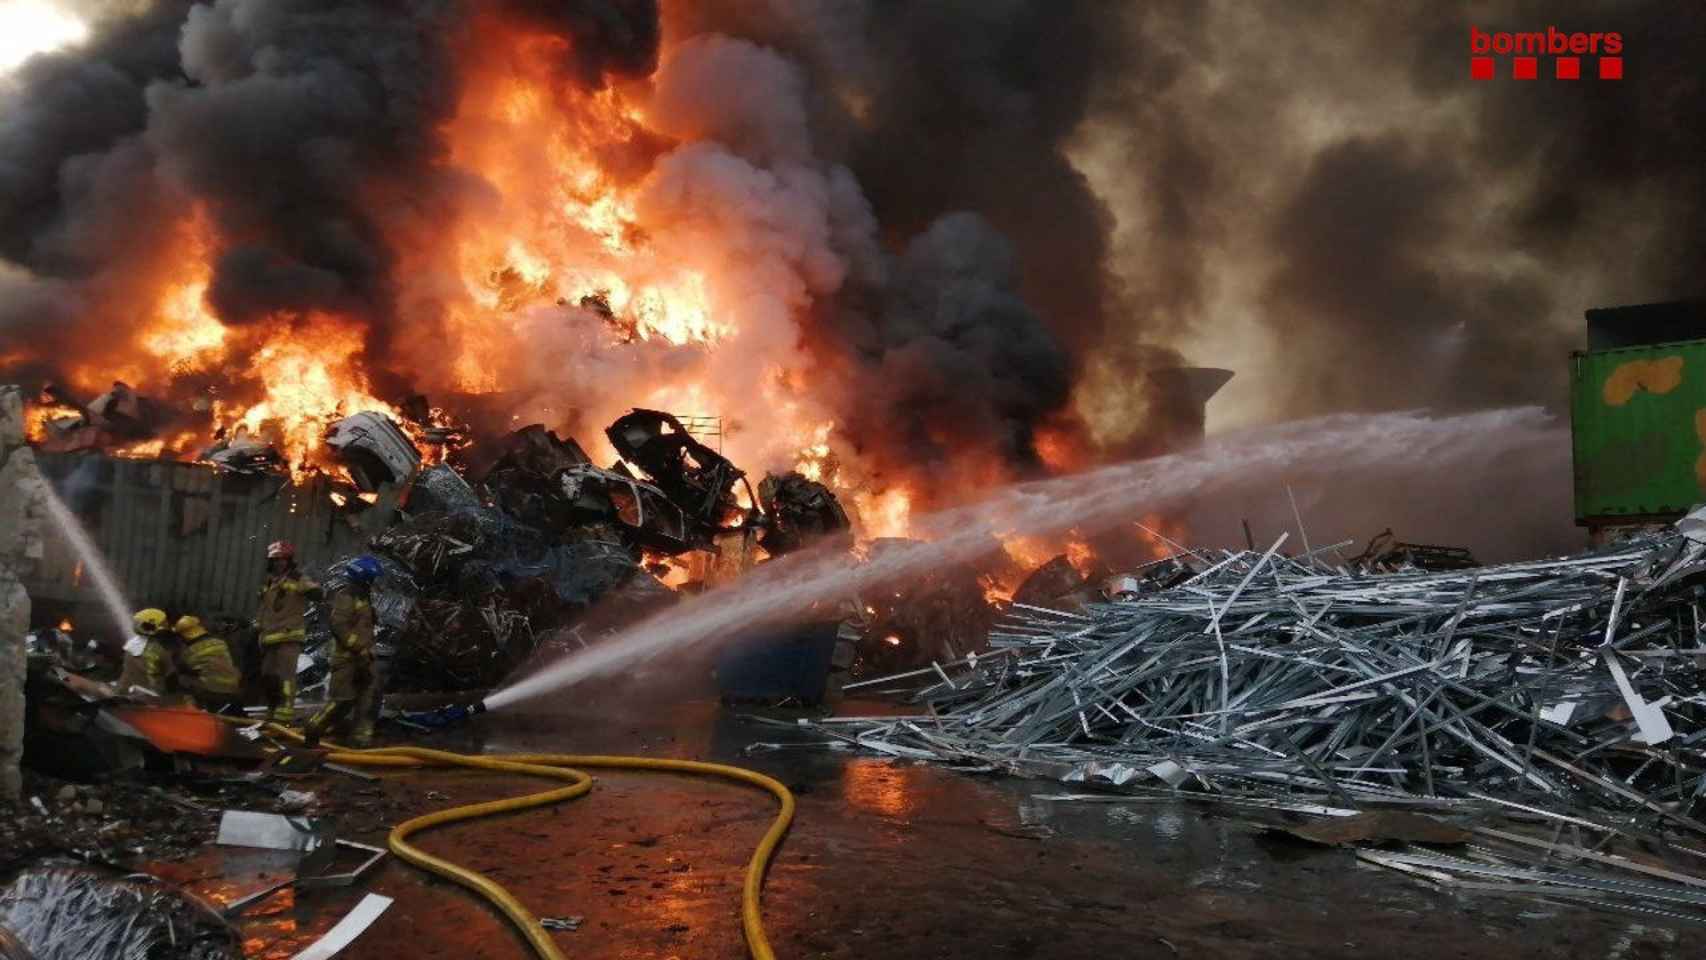 Arde una gran pila de chatarra en una planta de reciclaje en Castellbisbal (Barcelona) / BOMBERS DE LA GENERALITAT